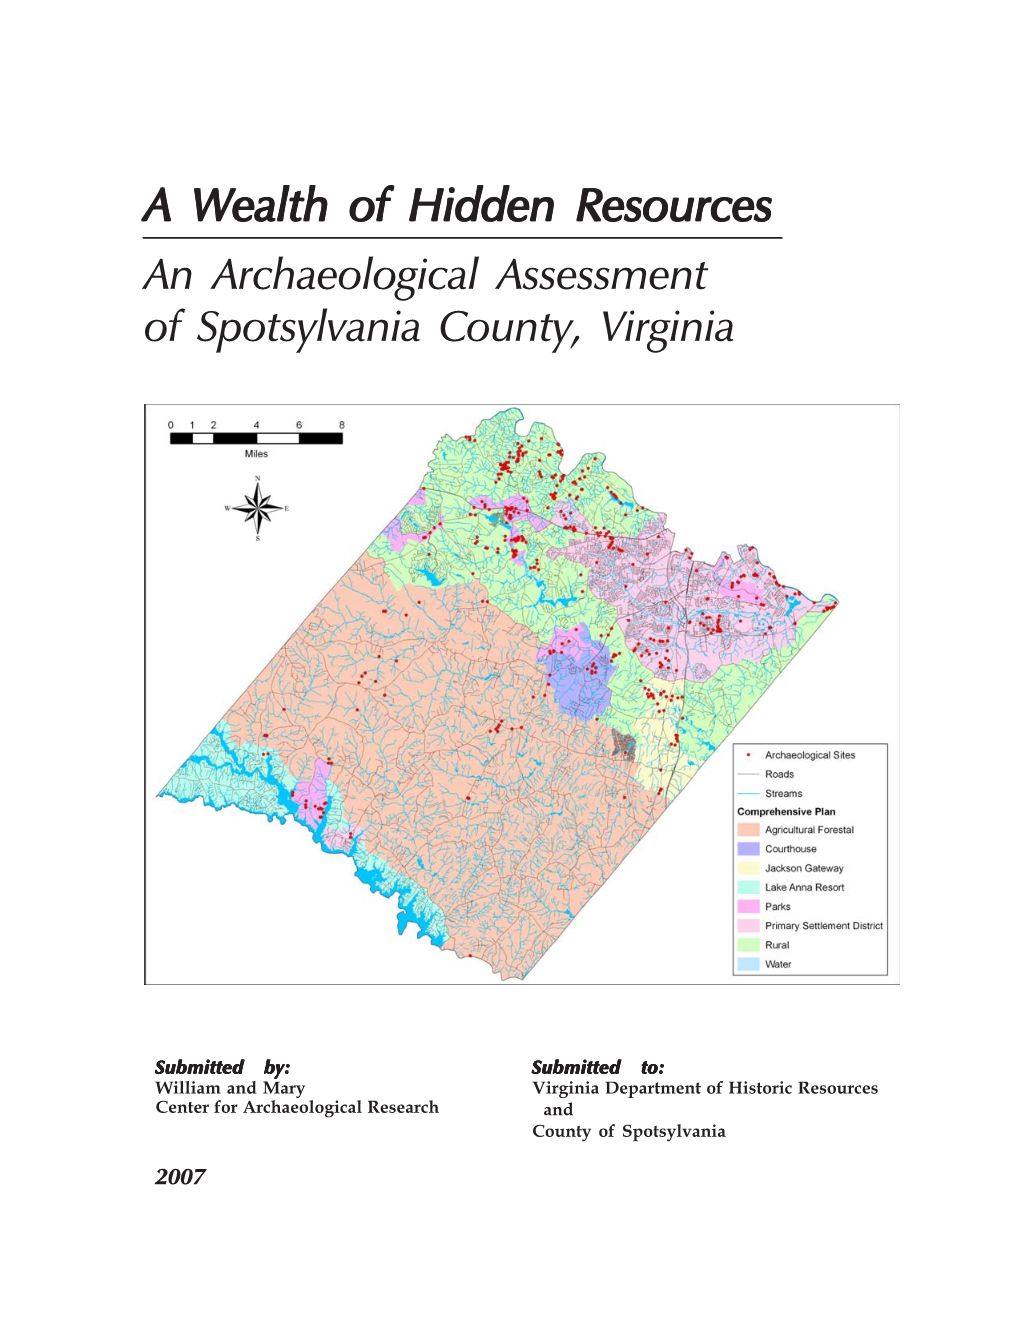 An Archaeological Assessment of Spotsylvania County, Virginia